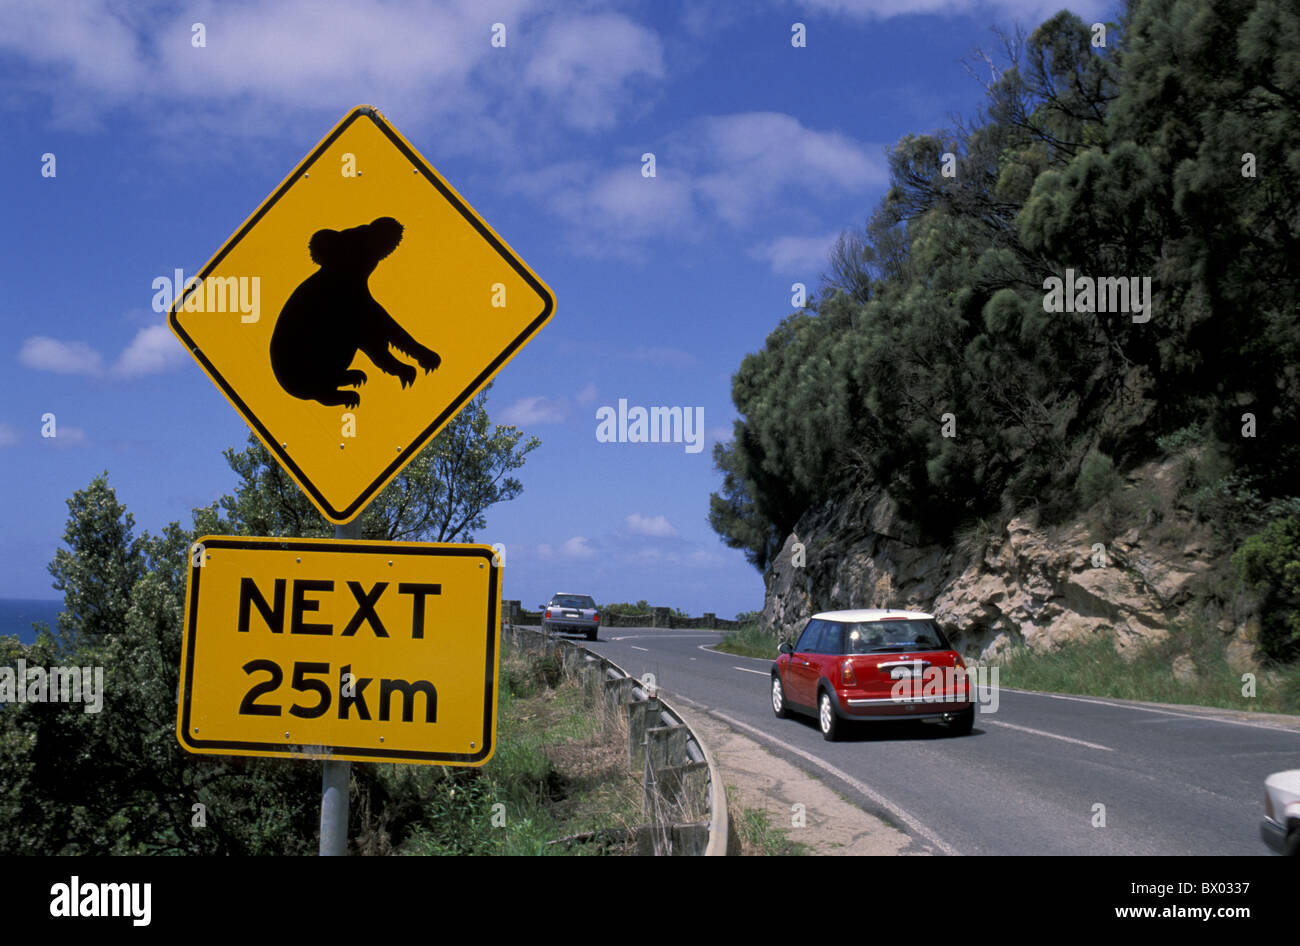 Montieren Sie Australien Great Ocean Road Koala montieren Defiance Lookout Victoria Straße Zeichen Warnung Achtung Autos Stockfoto